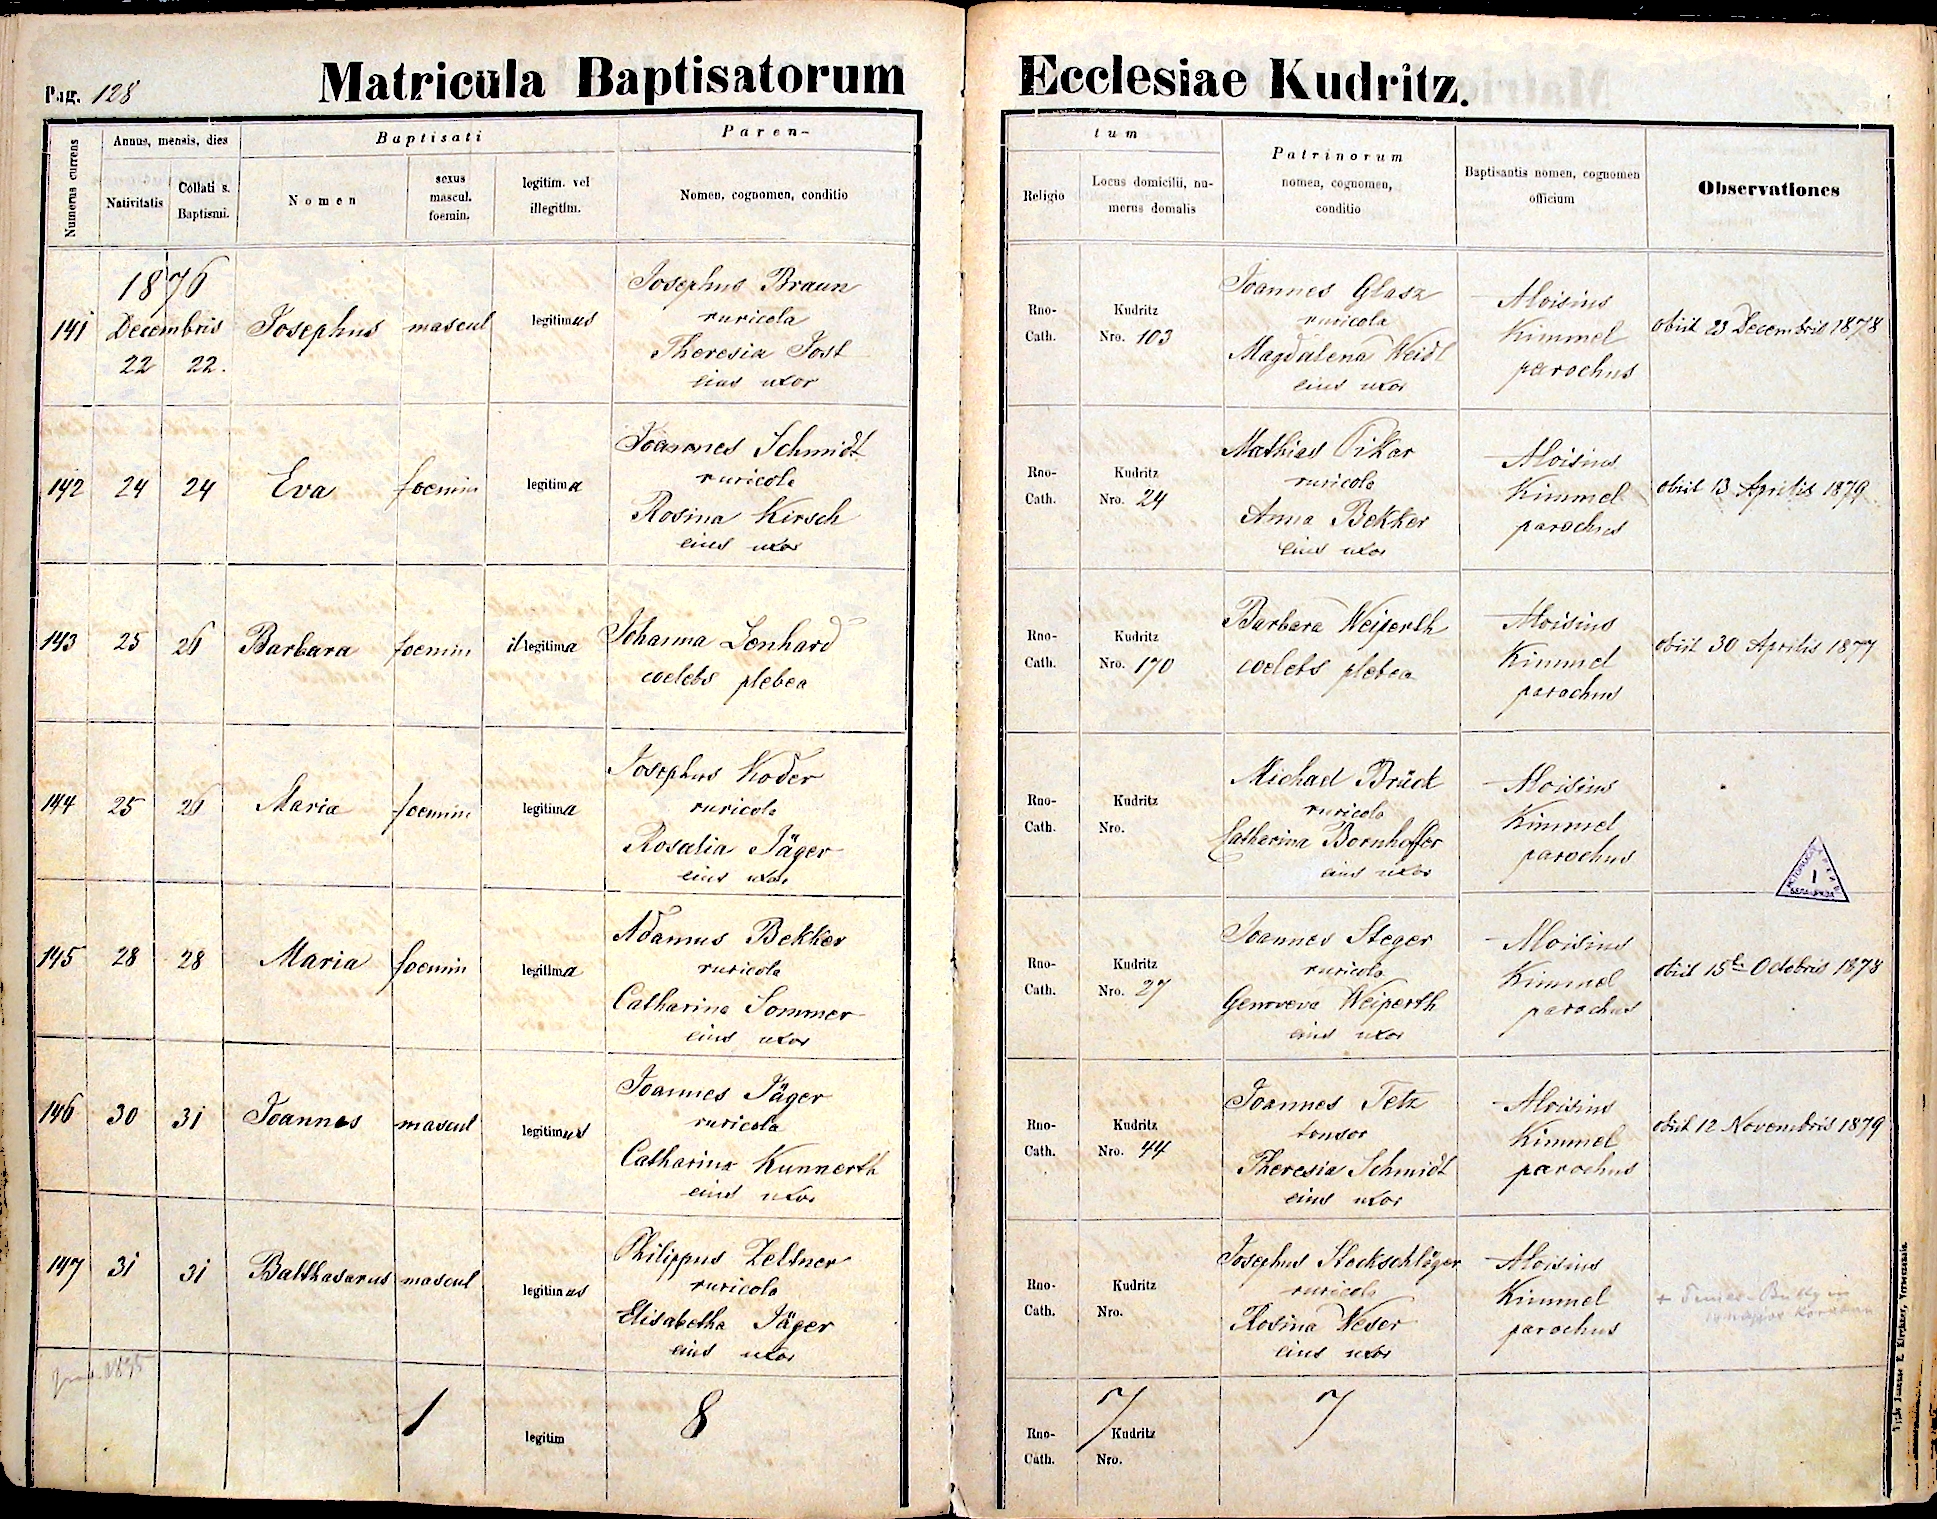 images/church_records/BIRTHS/1884-1899B/1892/128